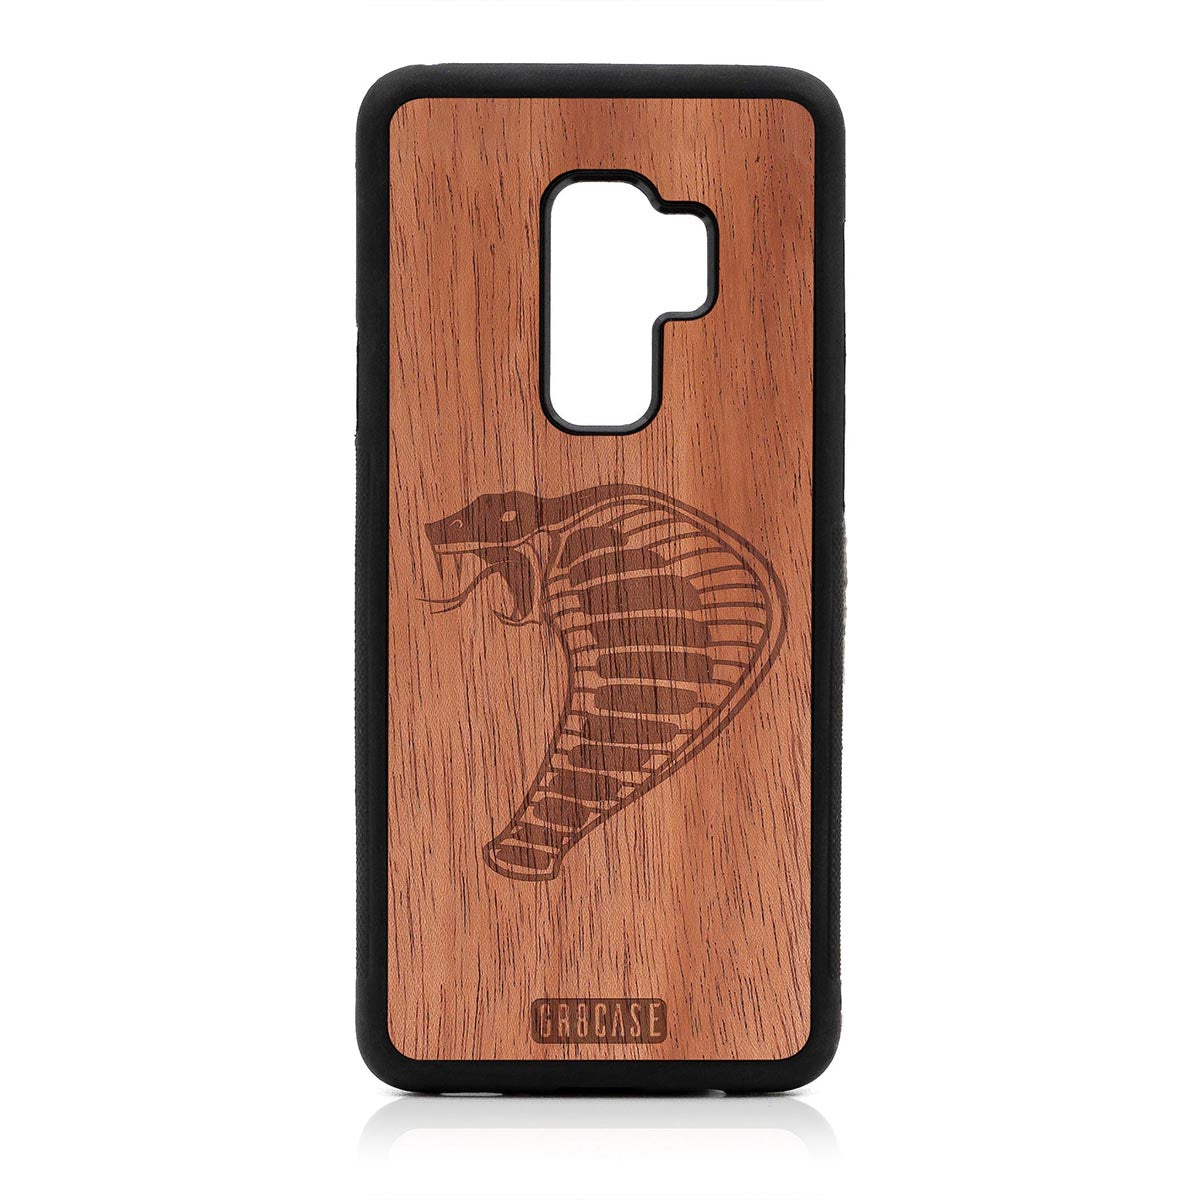 Cobra Design Wood Case For Samsung Galaxy S9 Plus by GR8CASE